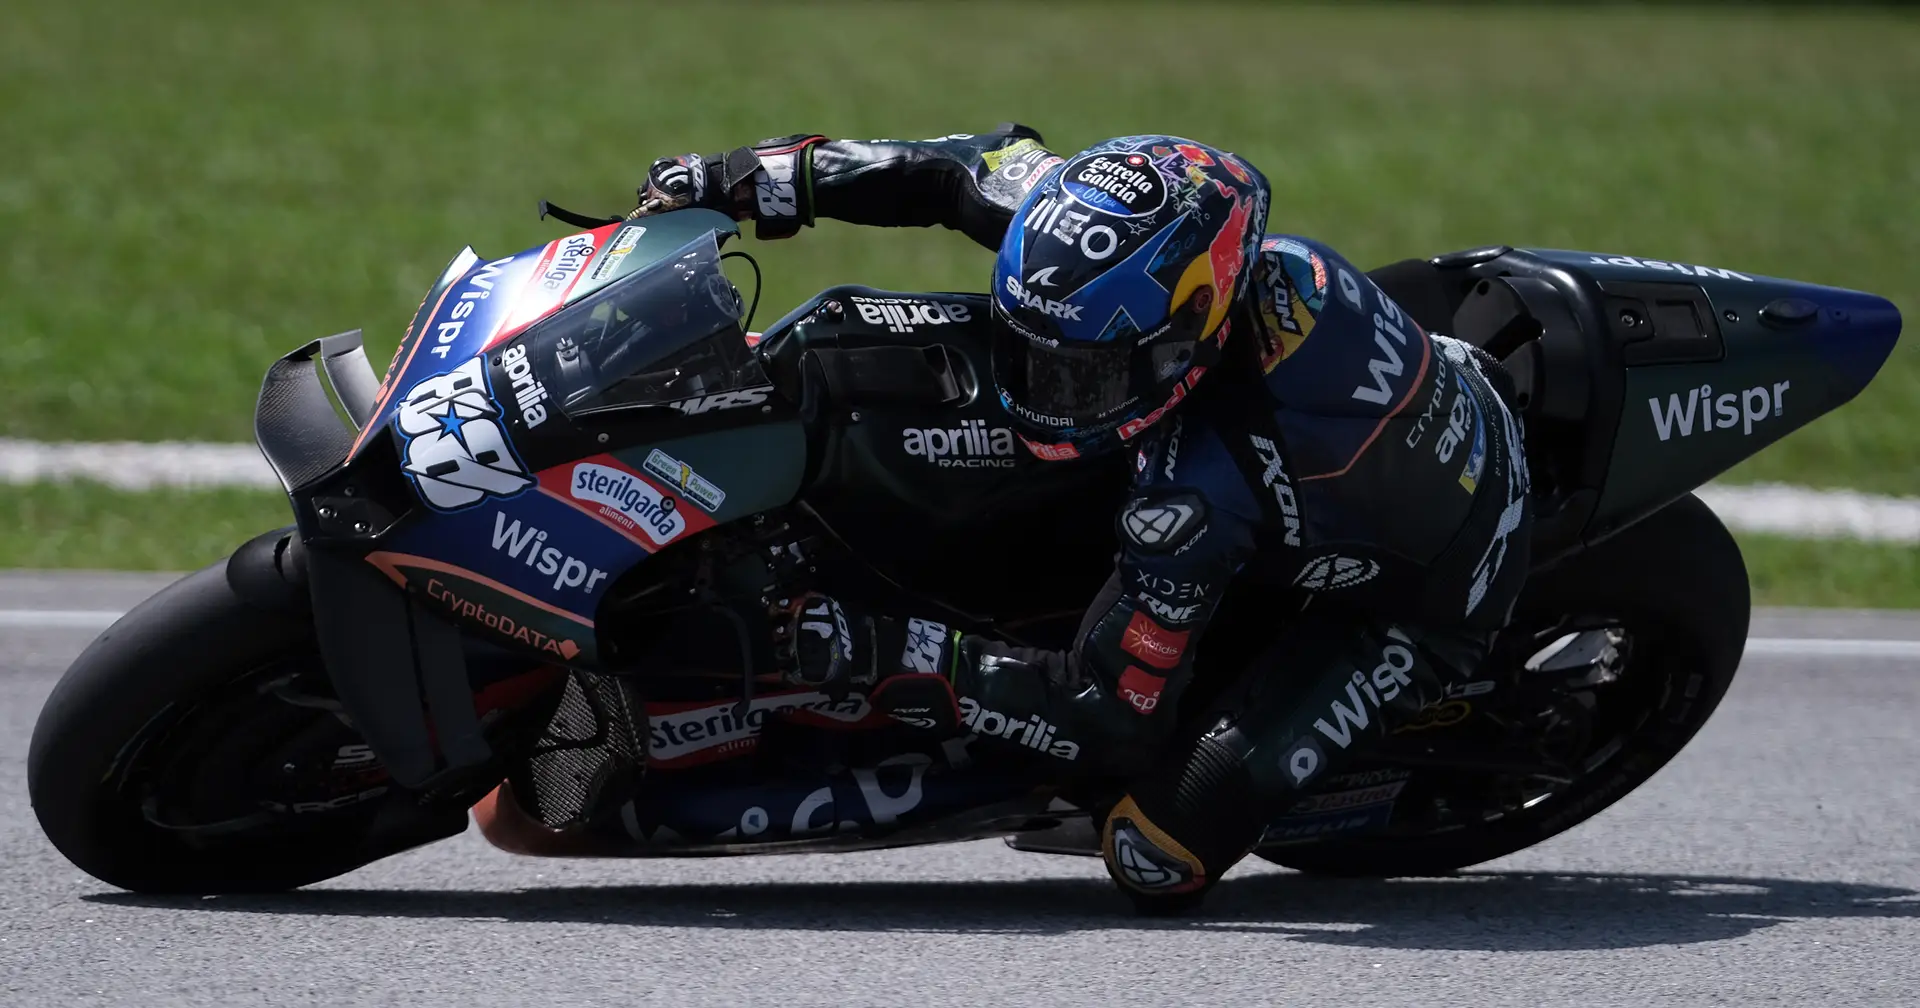 Miguel Oliveira fratura omoplata em queda no MotoGP do Qatar - SIC